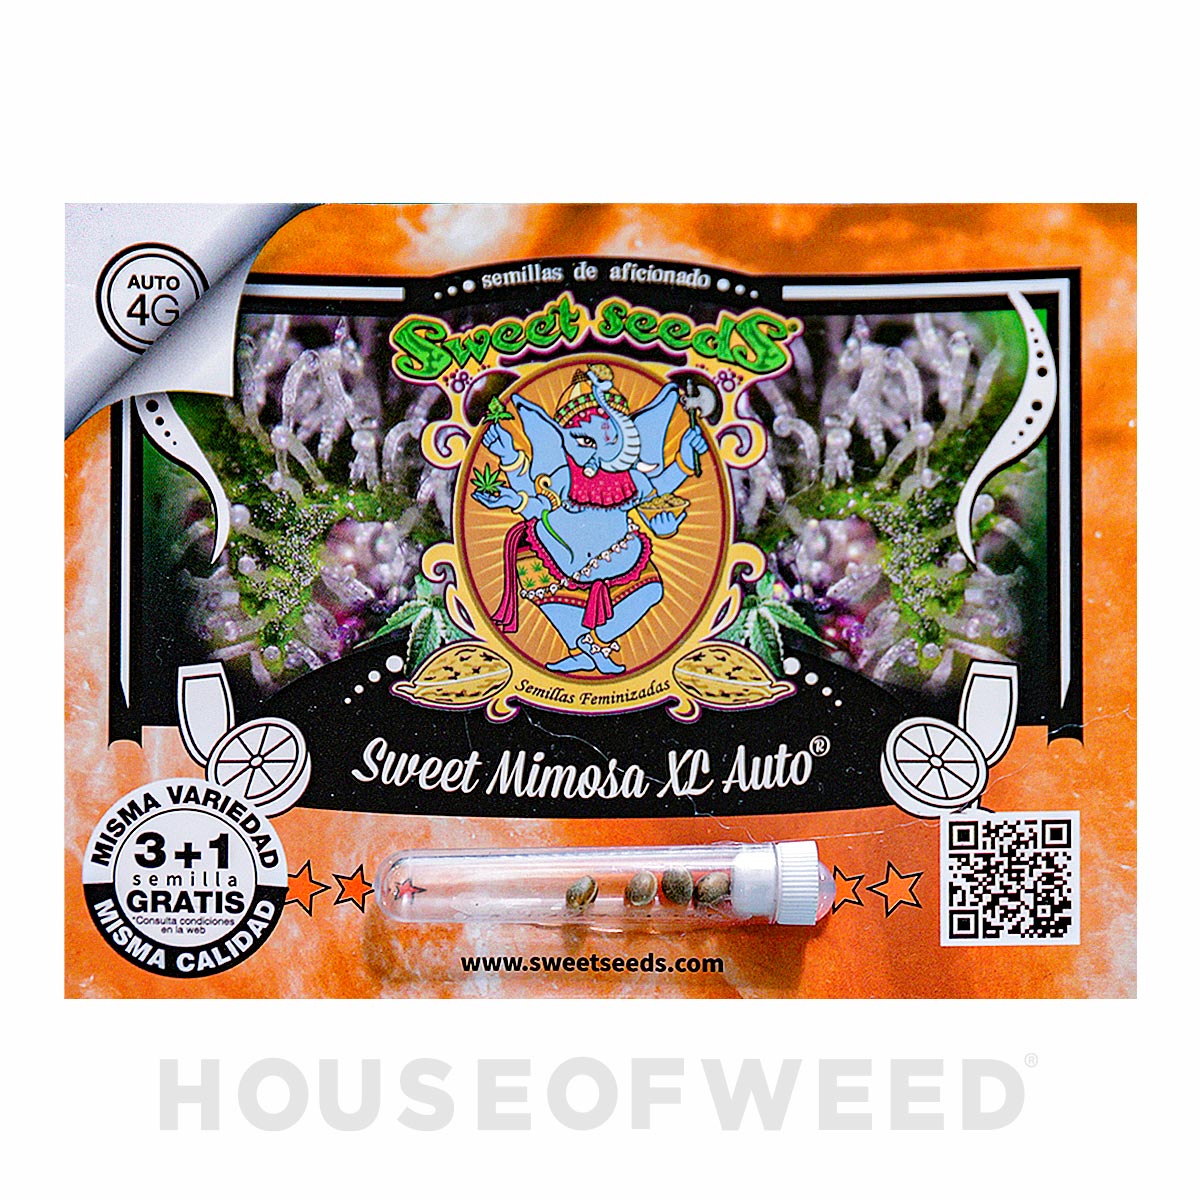 Empaque de Sweet Mimosa XL Auto de Sweet Seeds. Contiene 3 + 1 semilla gratis